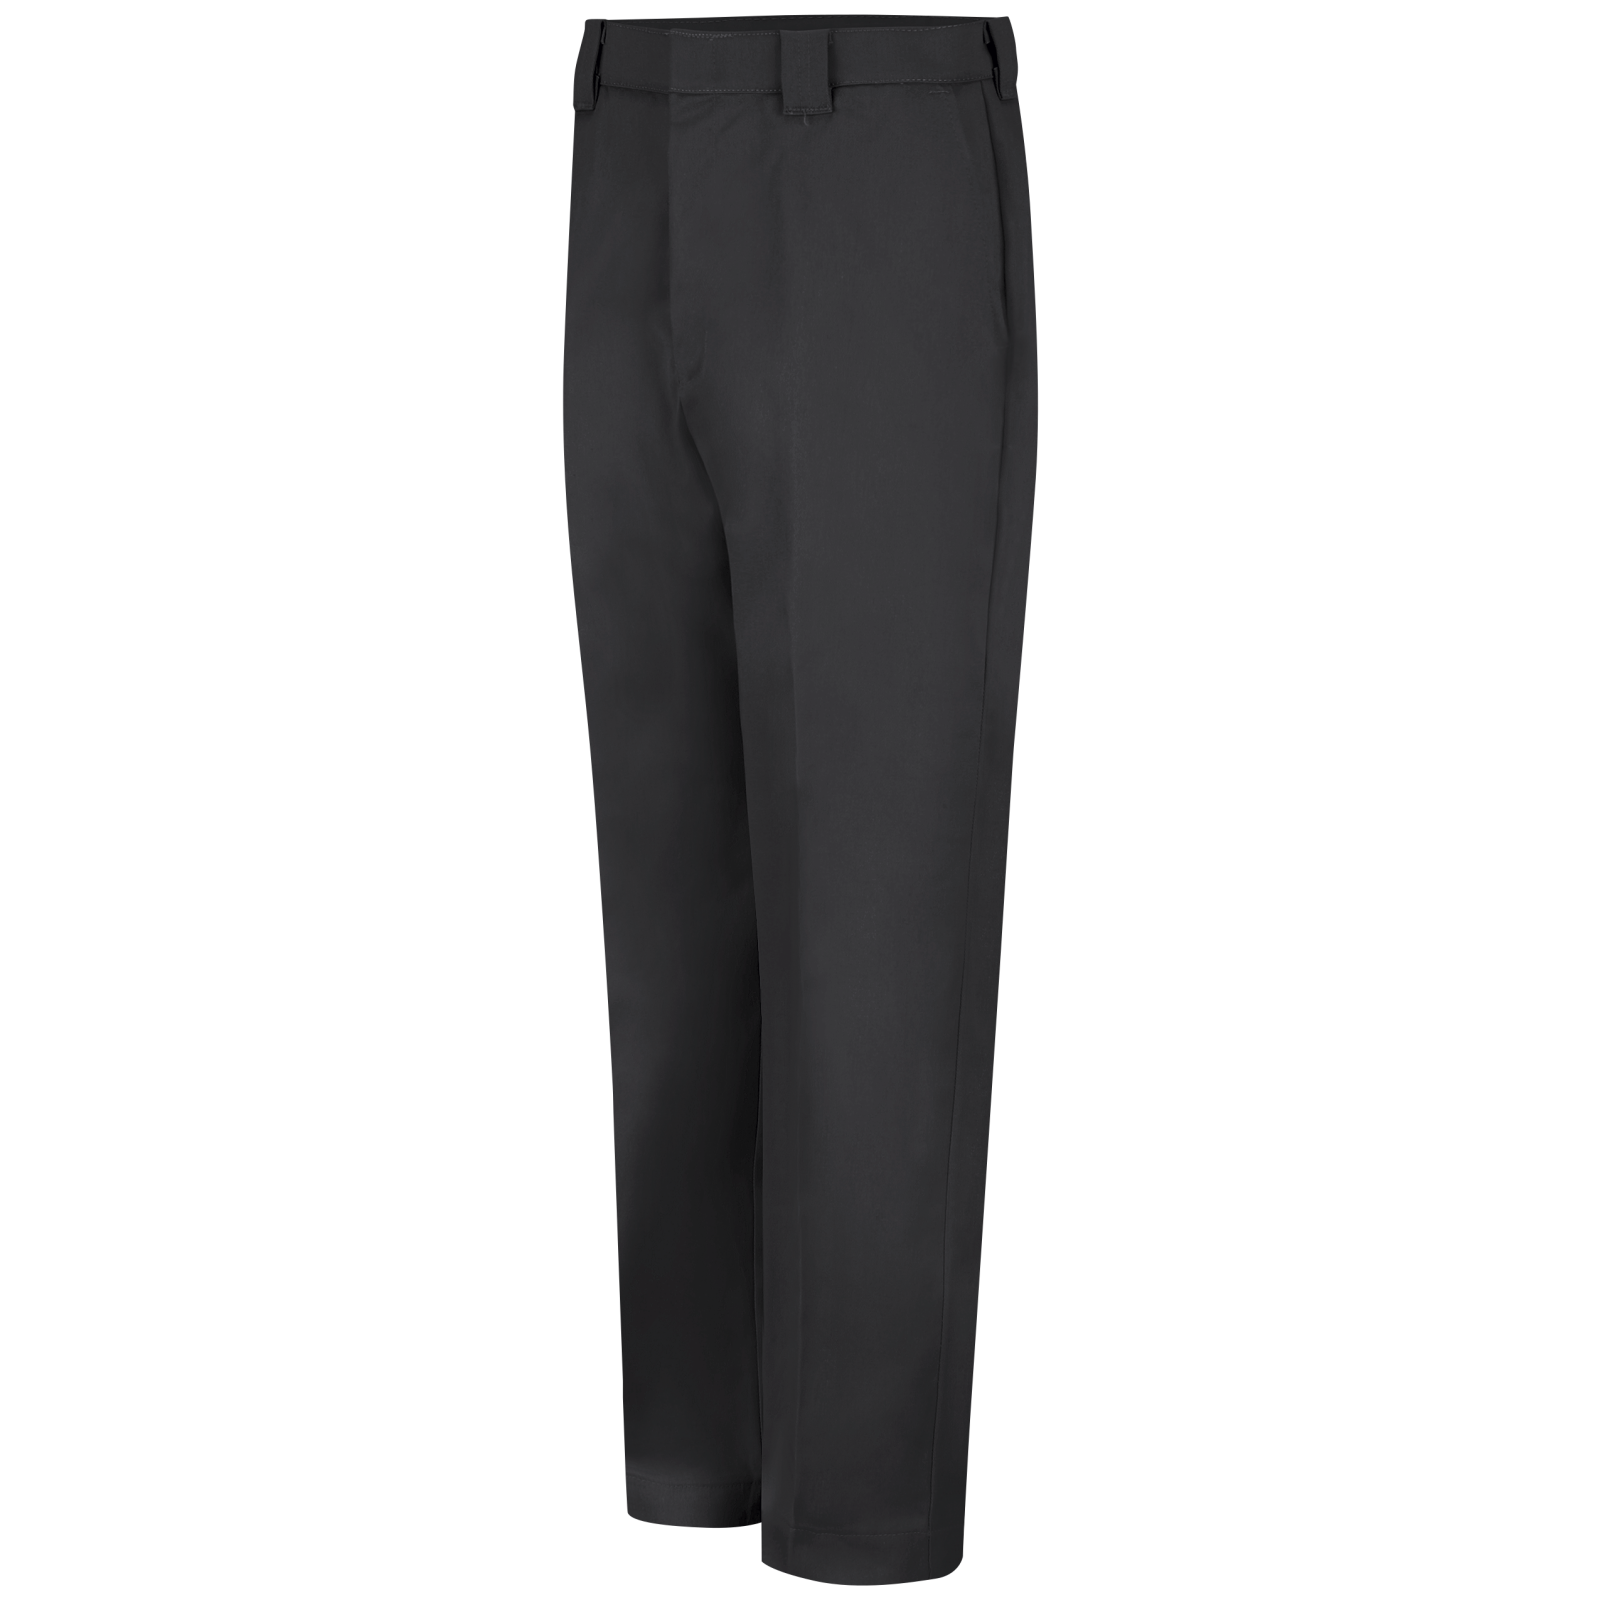 Buy Belie Mens Black Cargo Pants Hotel/Kitchen Uniform Elastic Waist Chef Pants  Black XL at Amazon.in